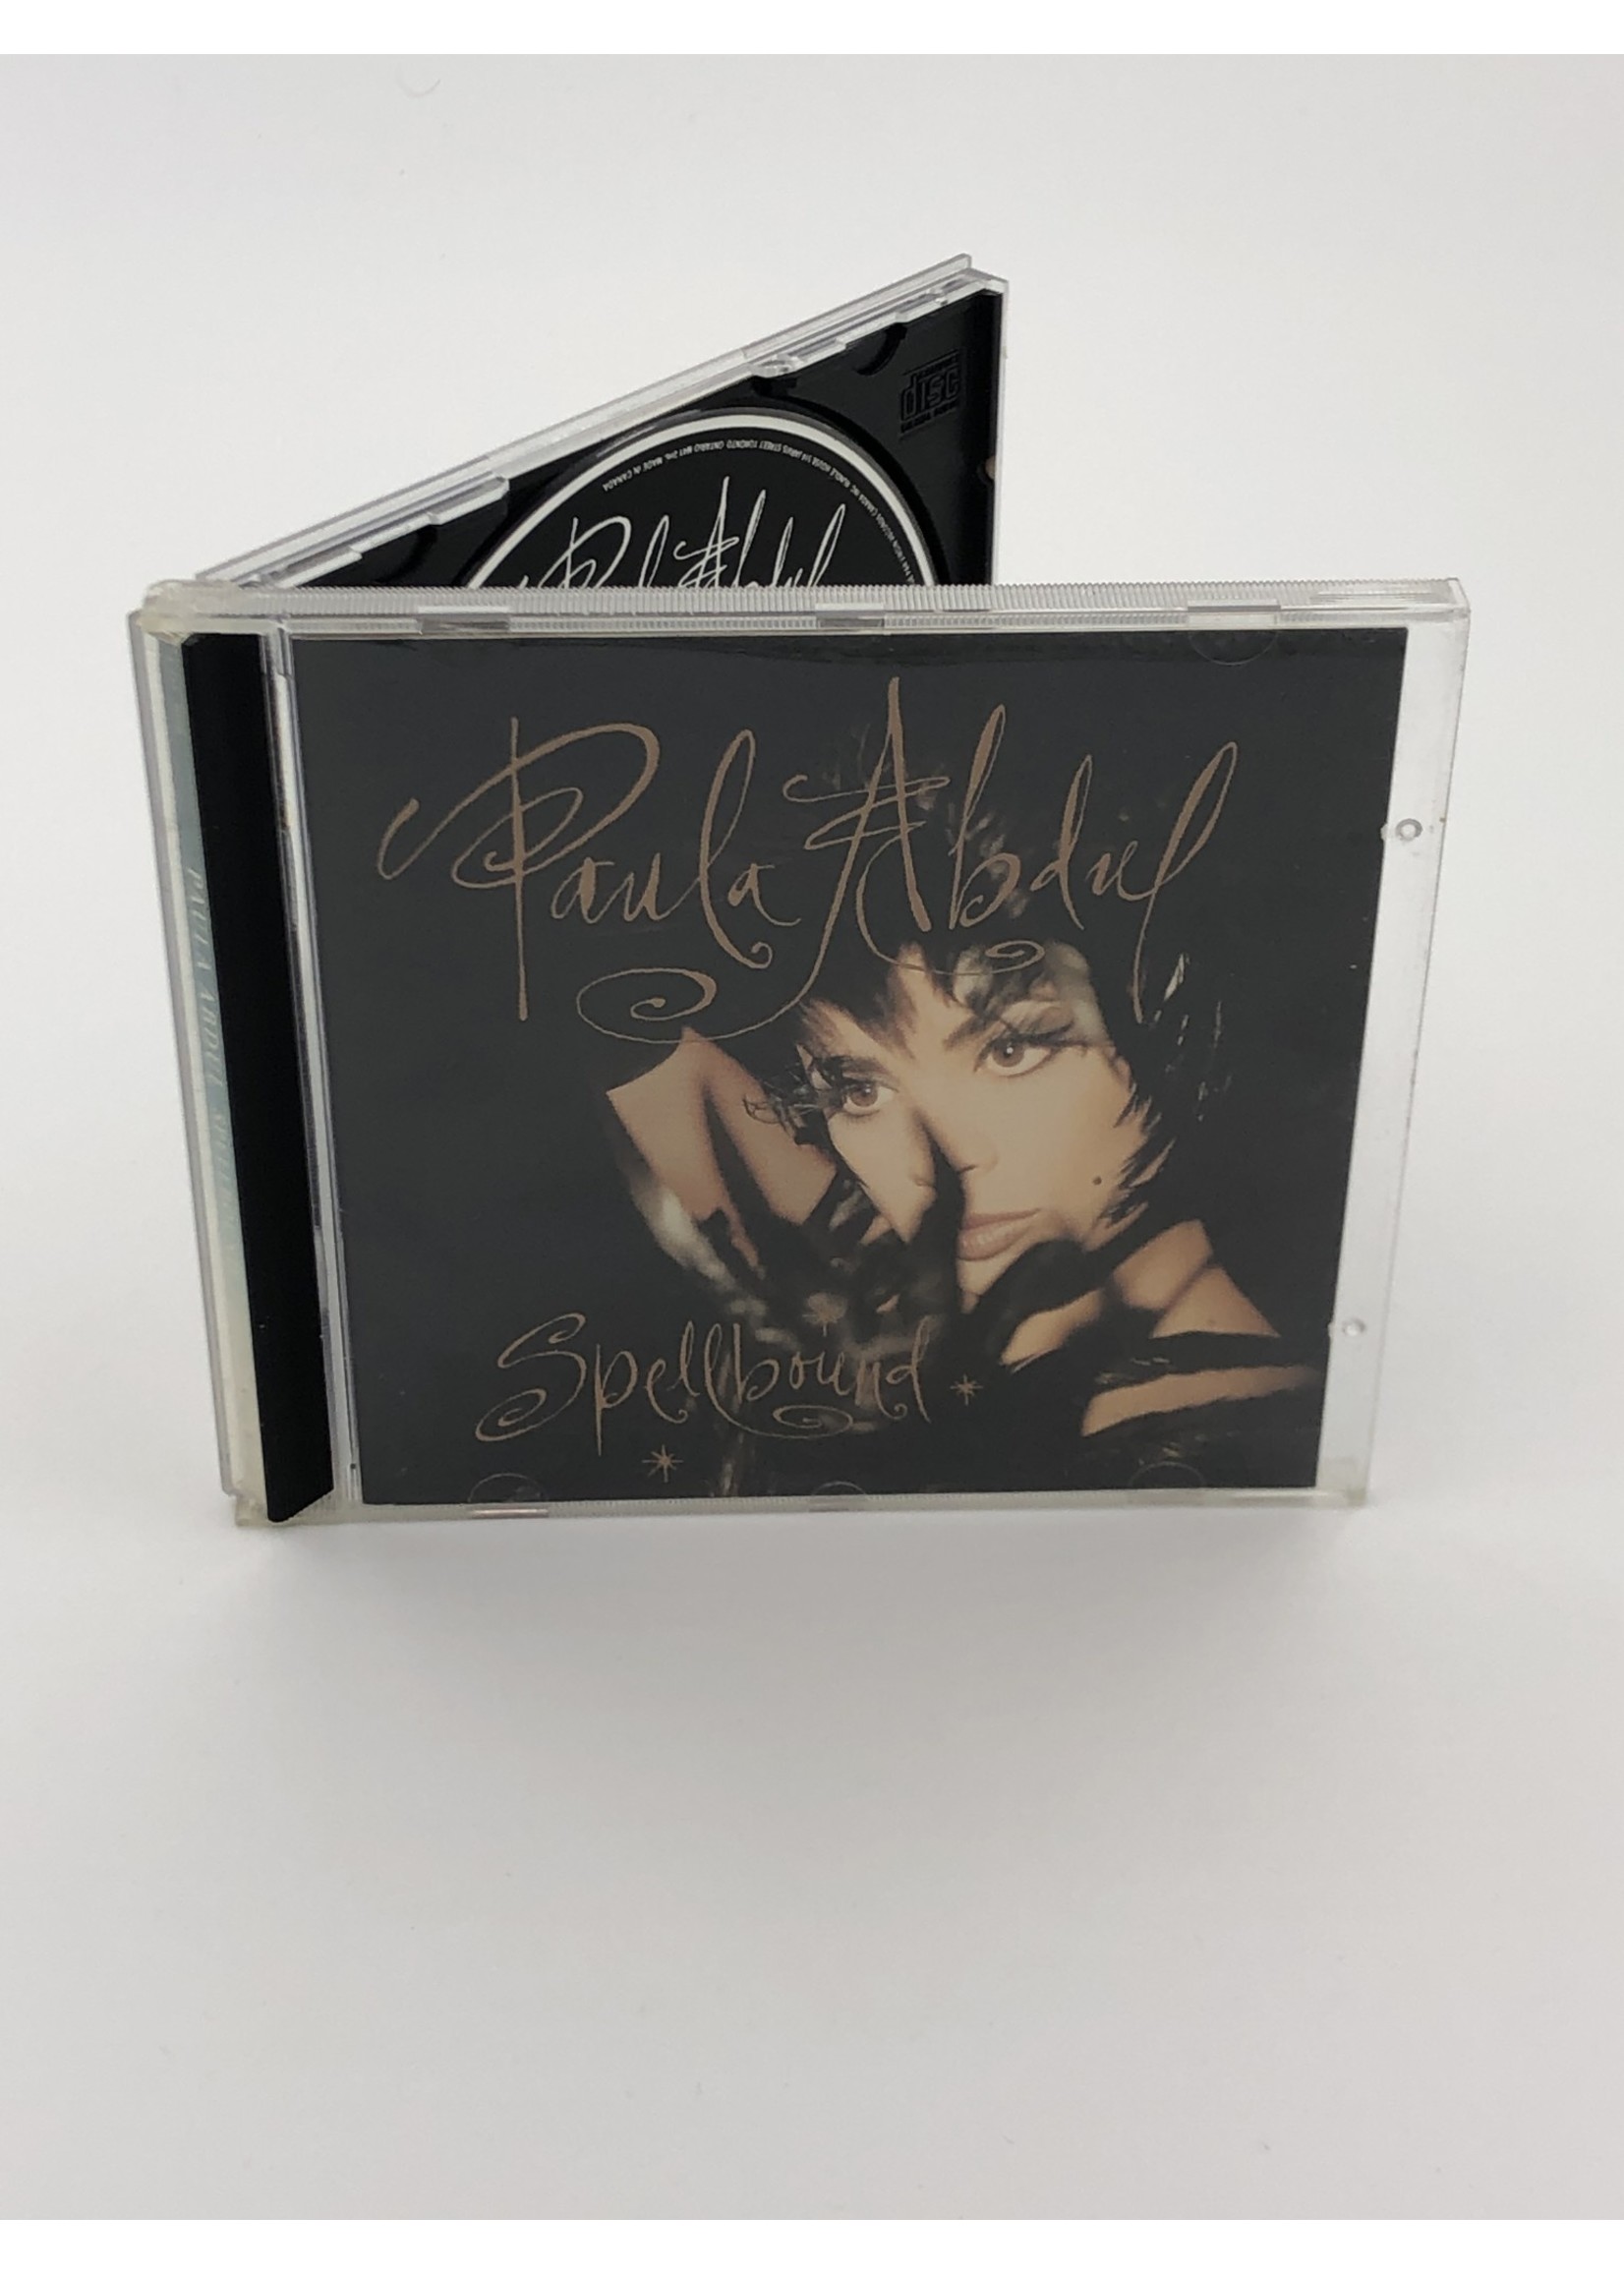 CD Paula Abdul: Spellbound CD